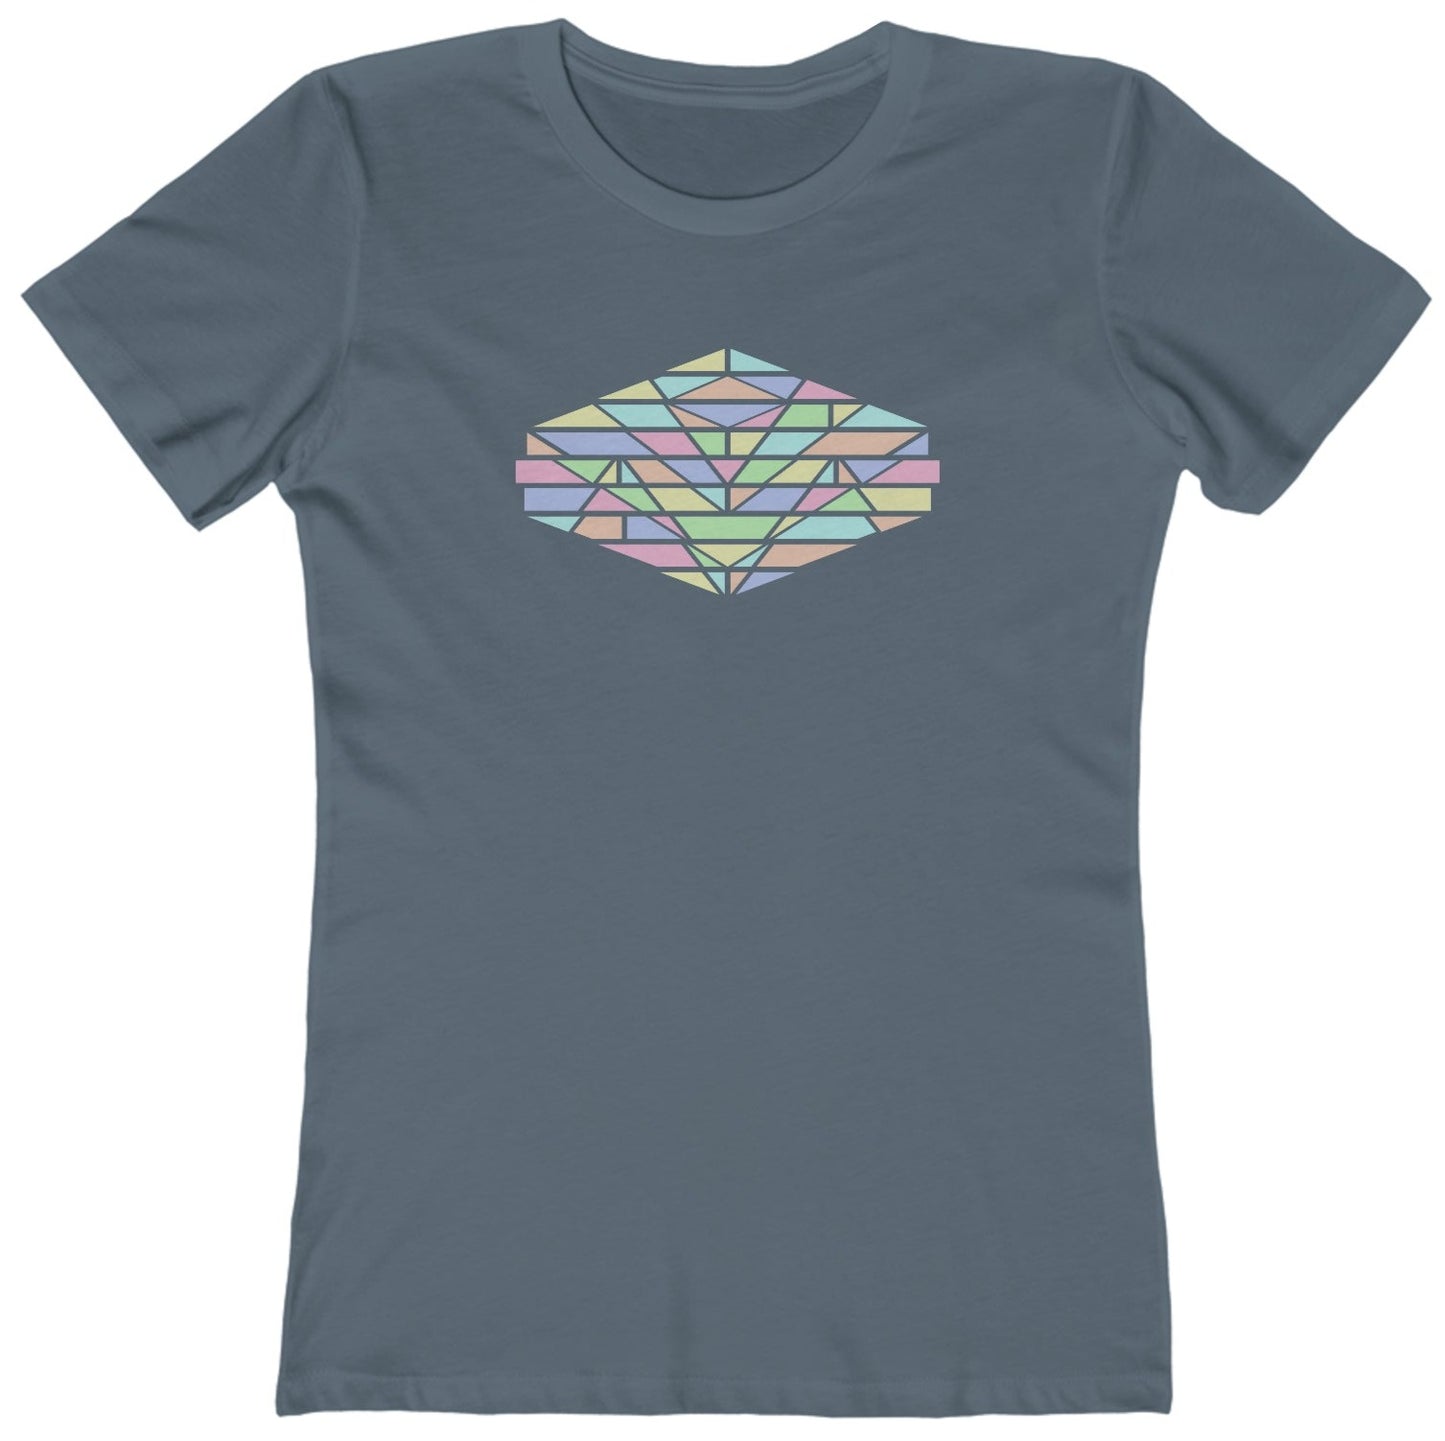 Colorful design t-shirt